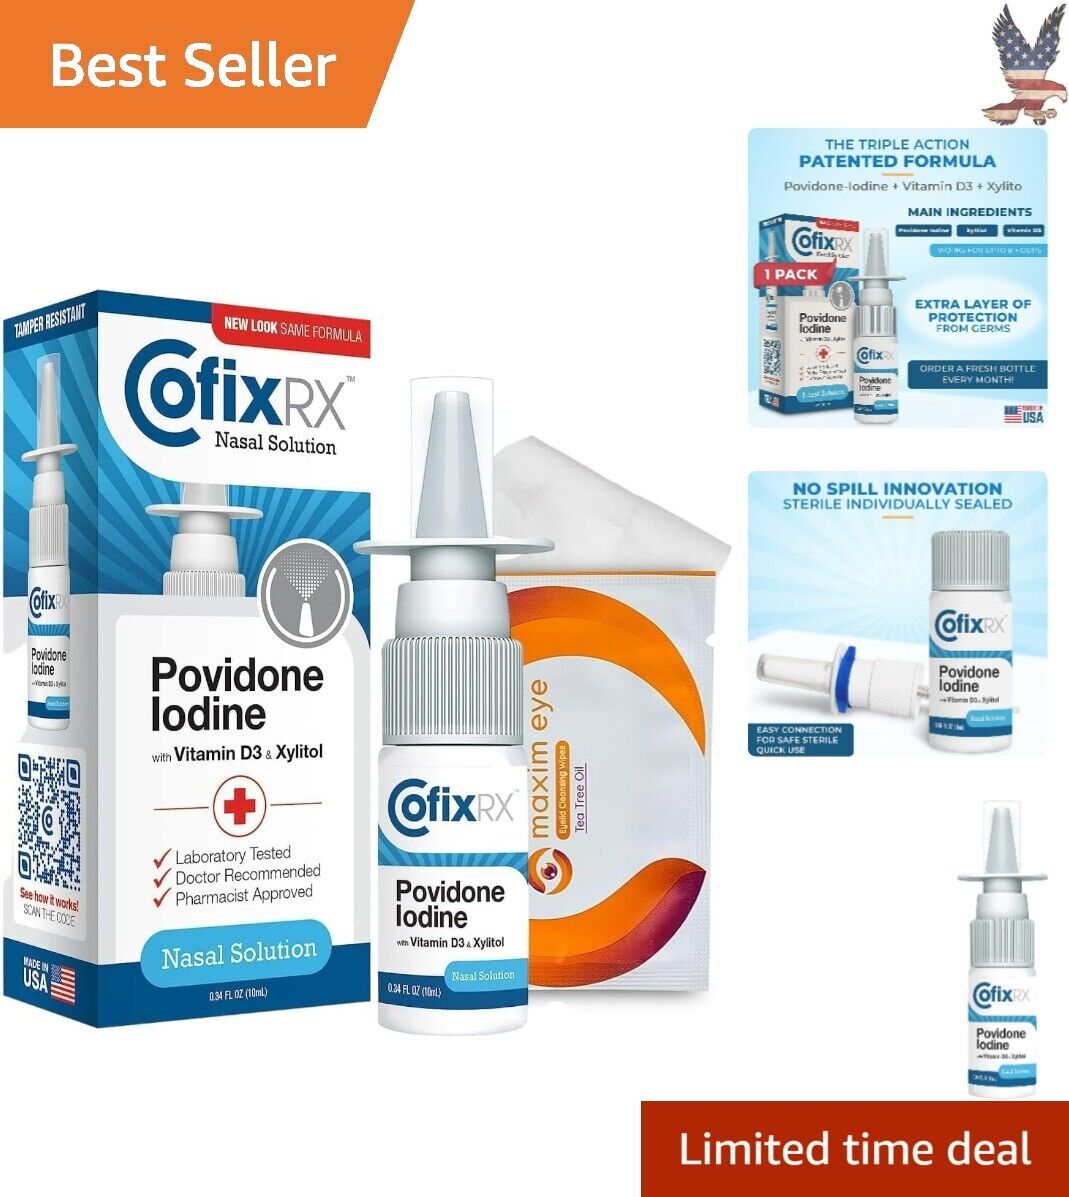 CofixRX Antiviral Nasal Spray - Fast-acting Triple Shield Protection - 1 pack